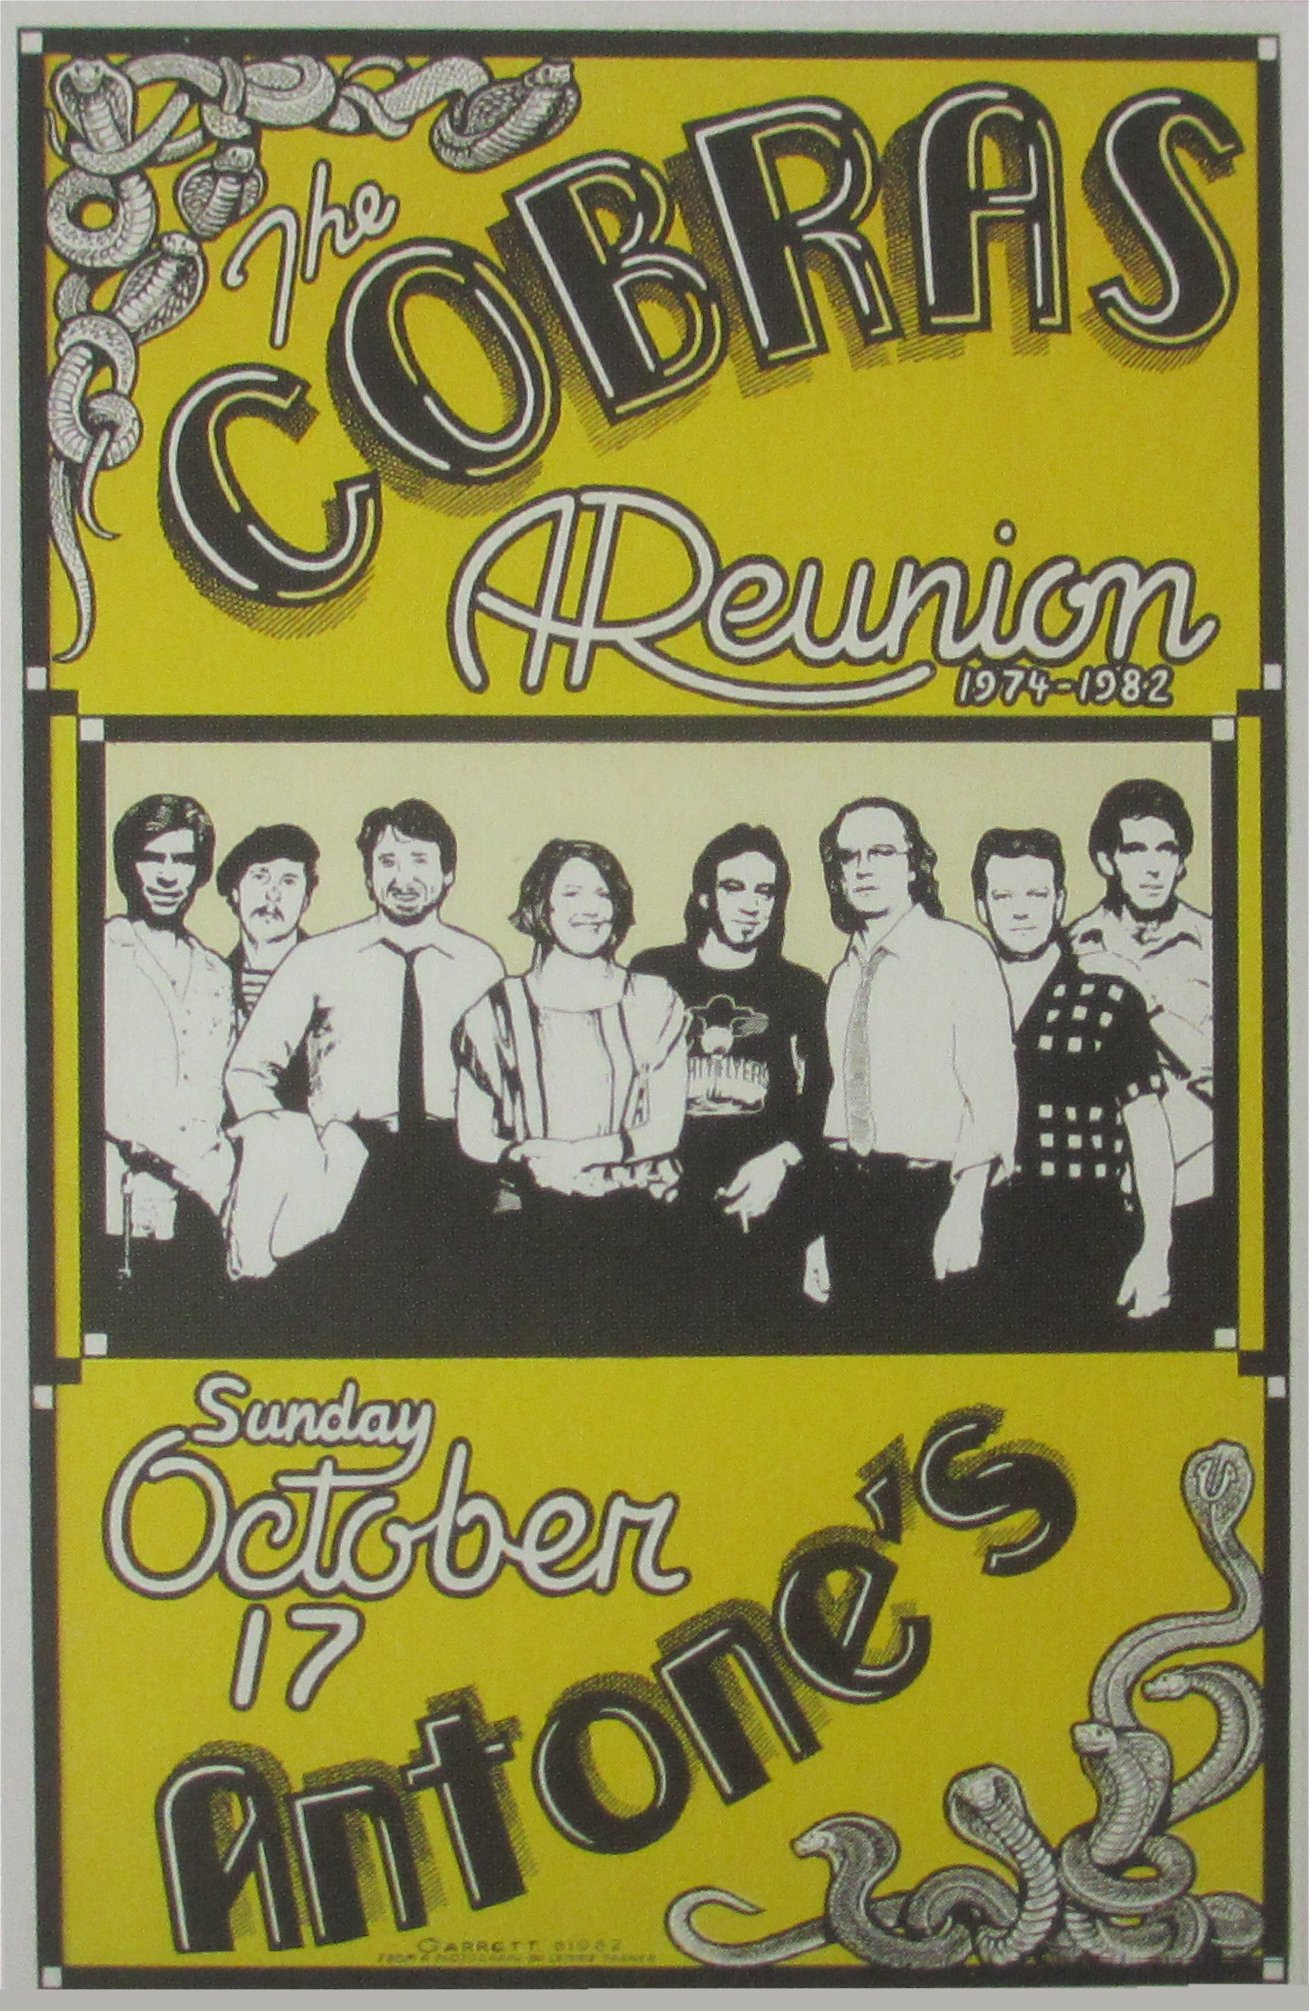 Cobras Reunion 17th October 1982